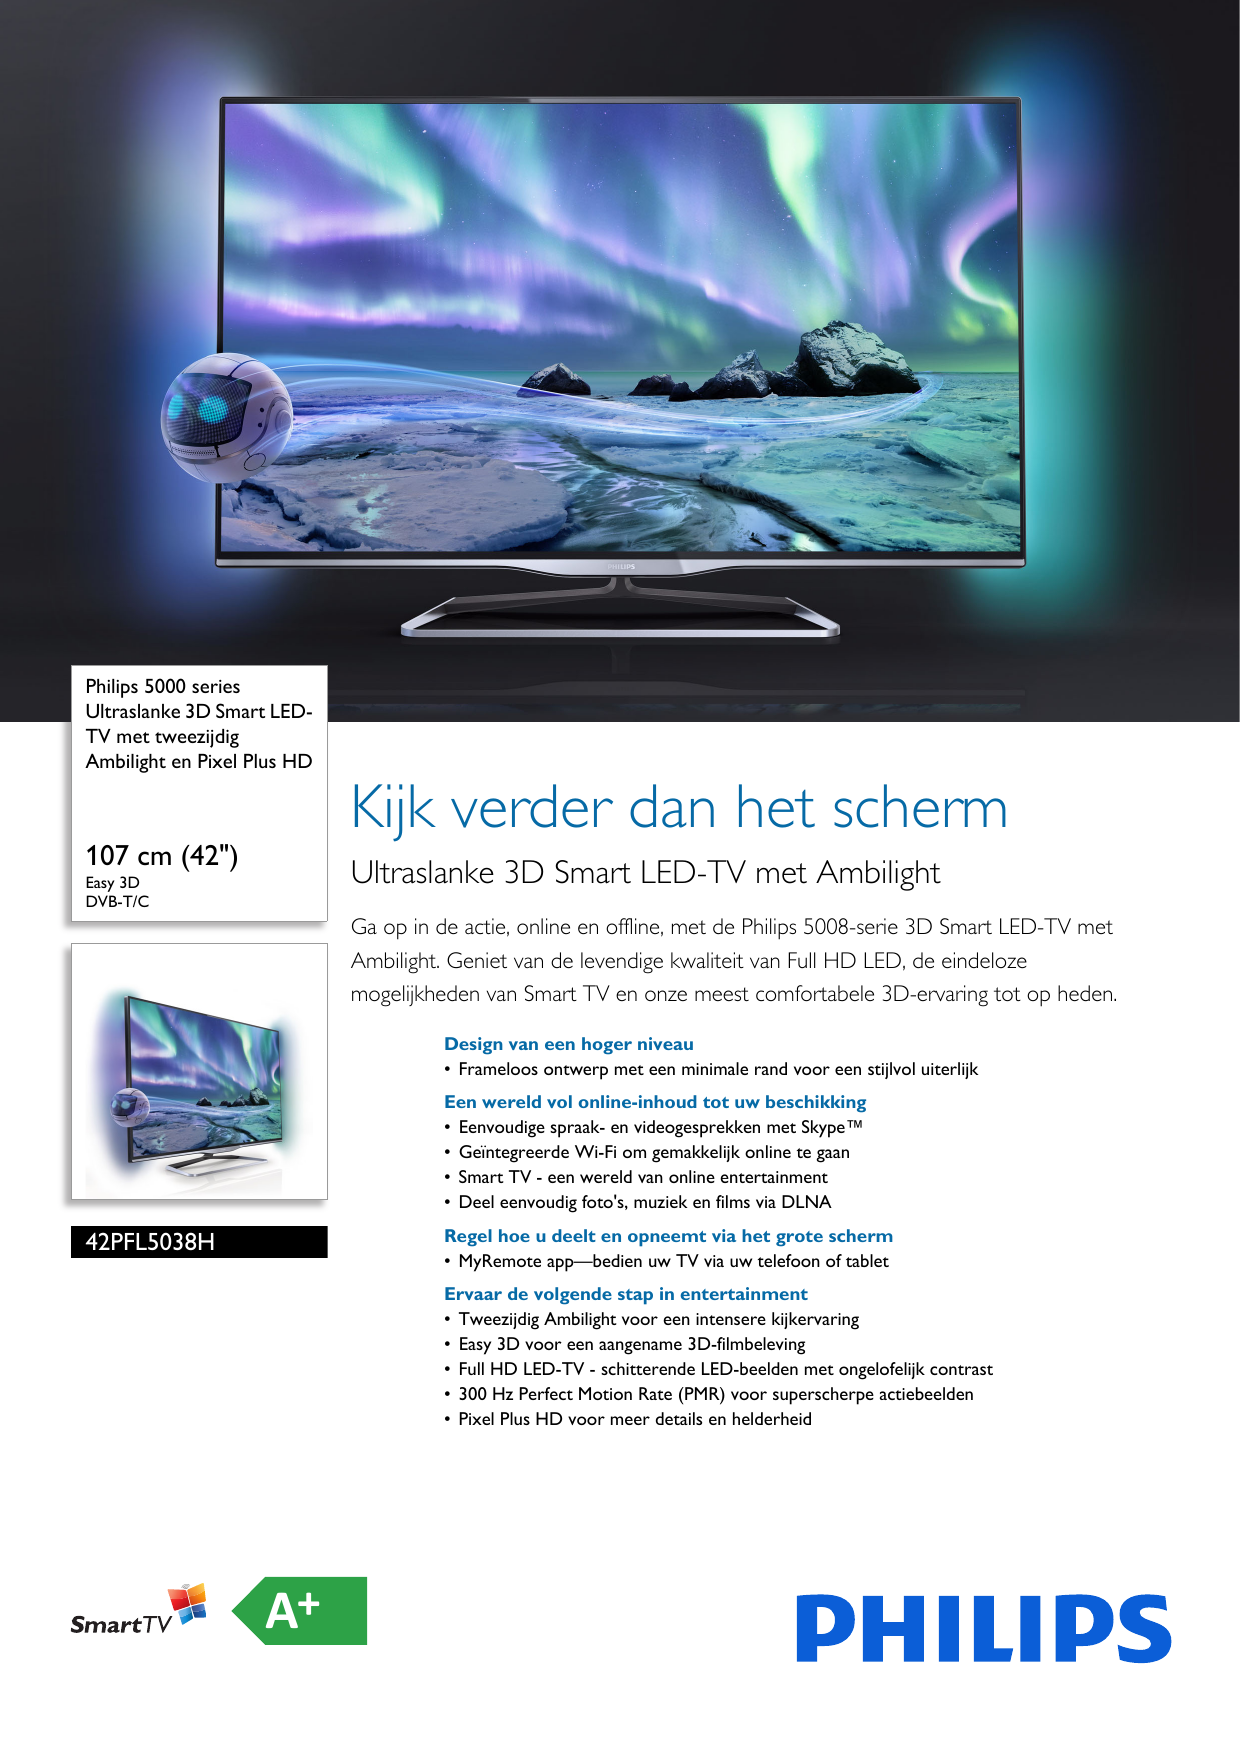 Groot universum mot halen Philips 42PFL5038H/12 Ultraslanke 3D Smart LED TV Met Tweezijdig Ambilight  En Pixel Plus HD User Manual Brochure 42pfl5038h 12 Pss Nldnl